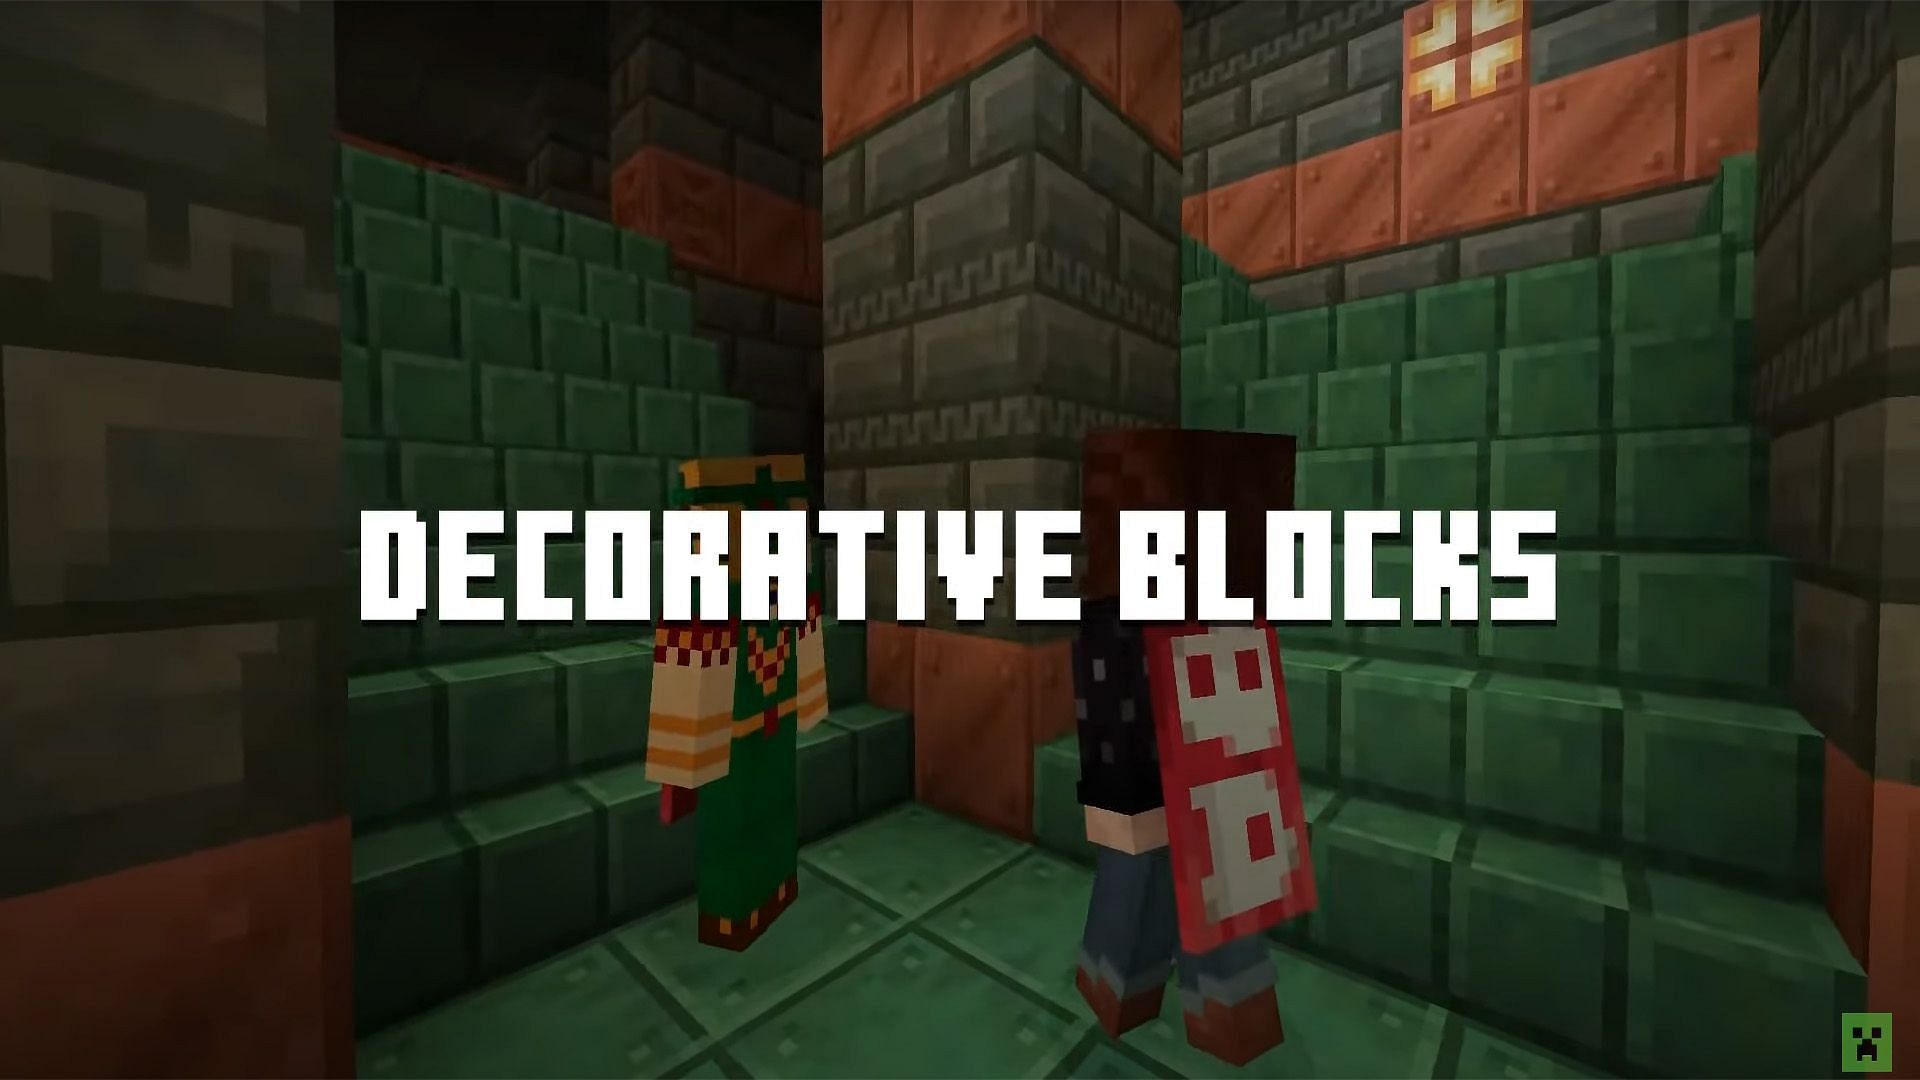 Decorative blocks are a great addition to the world (Image via Mojang Studios)